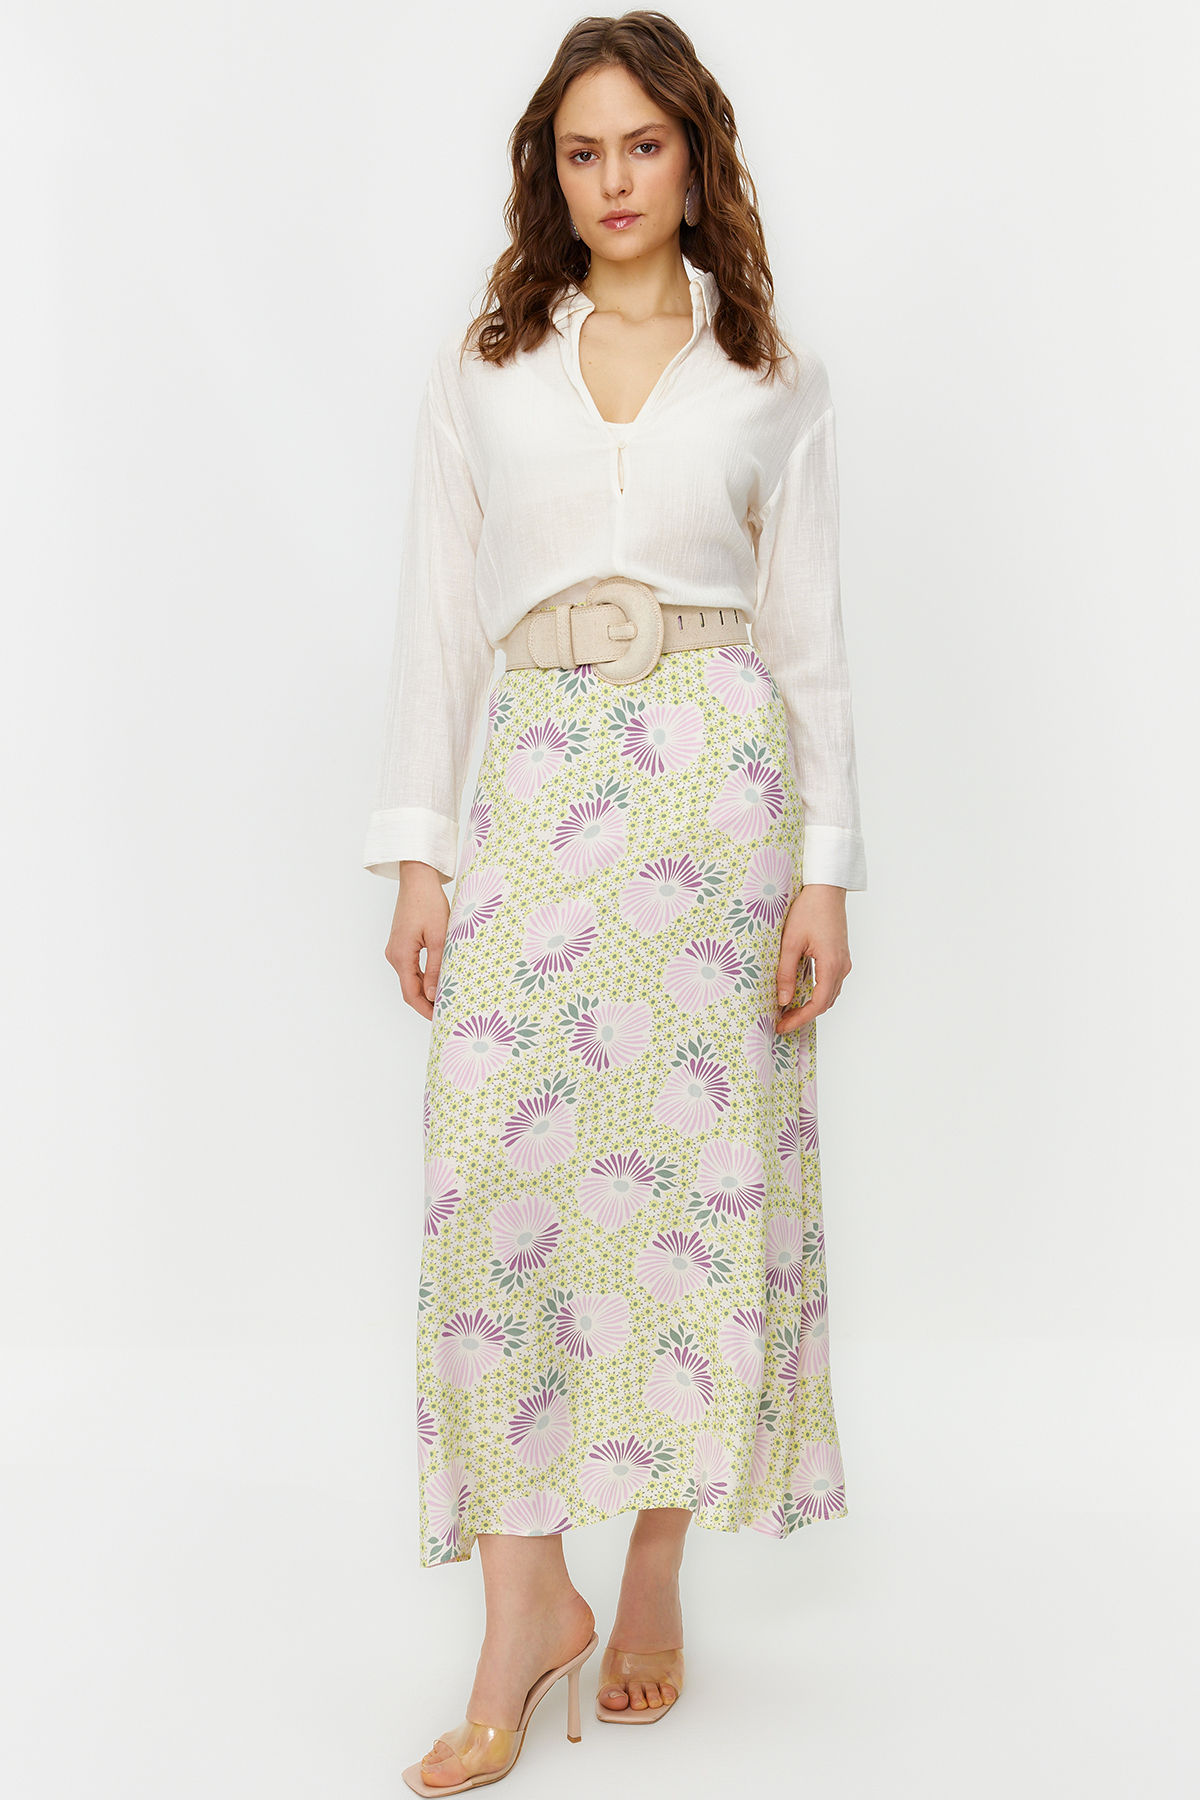 Trendyol Powder Flower Patterned A-Line Woven Skirt